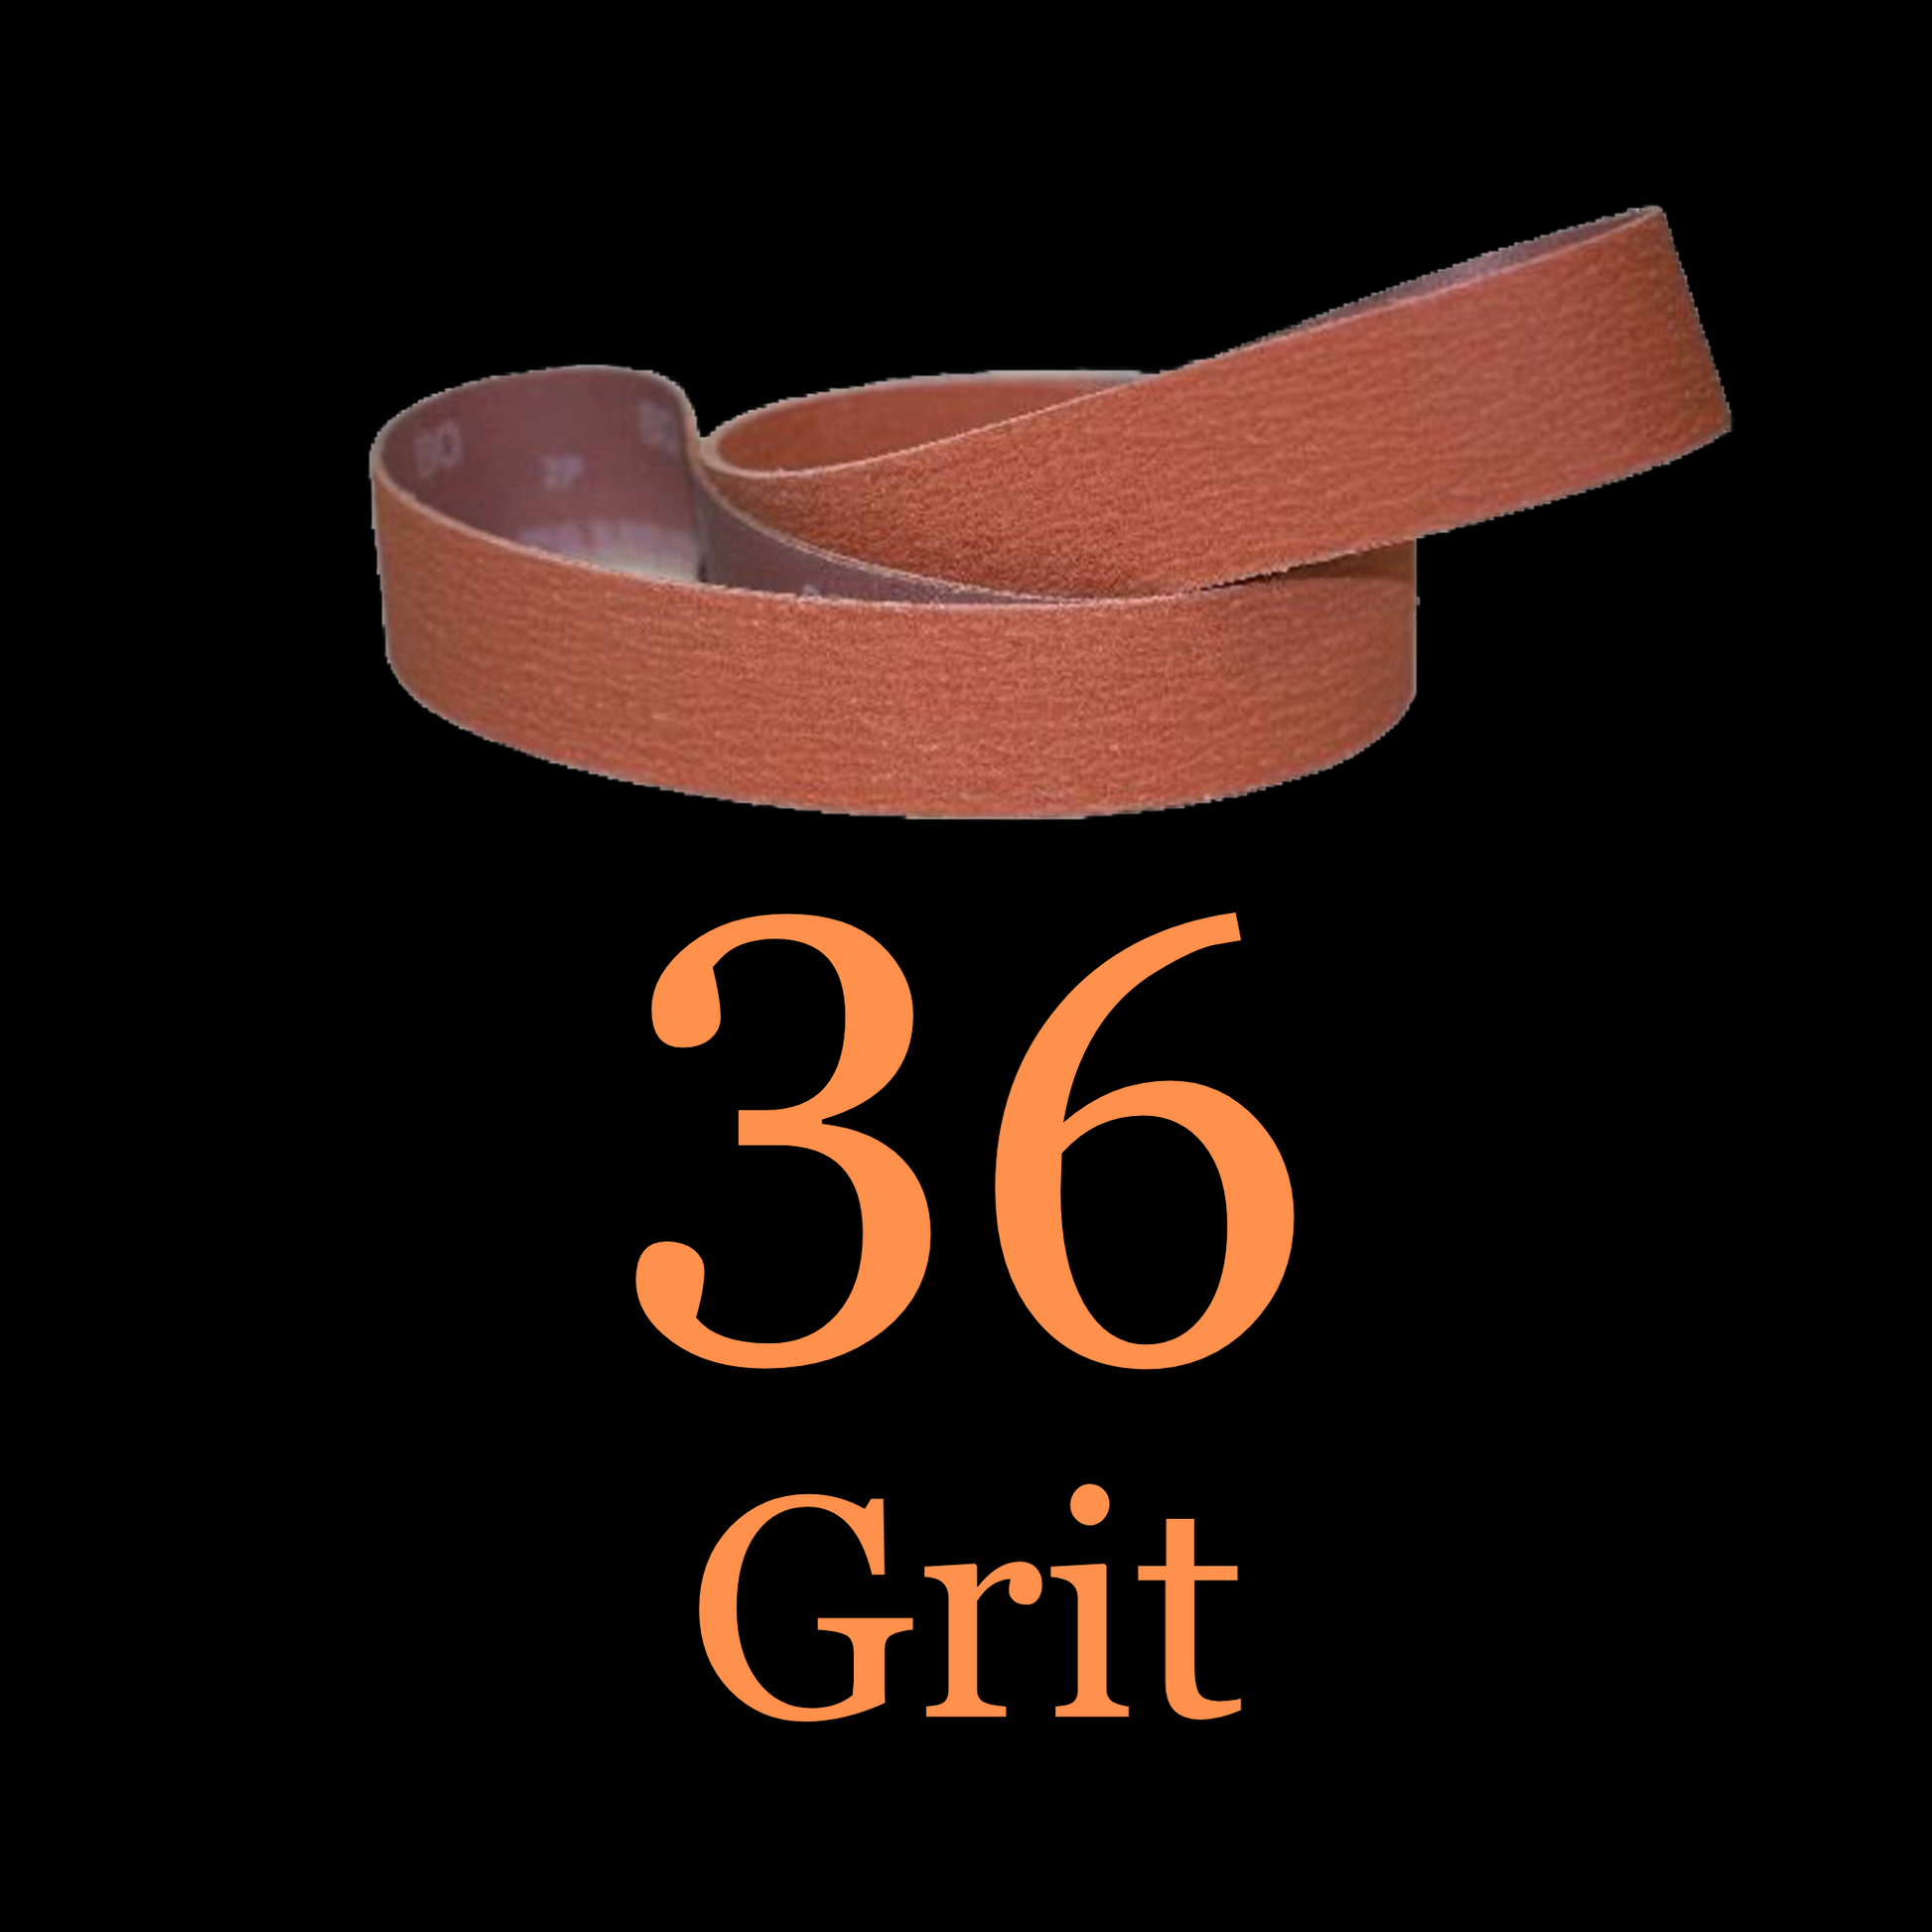 2” x 48” Blaze Ceramic Belt 36 Grit